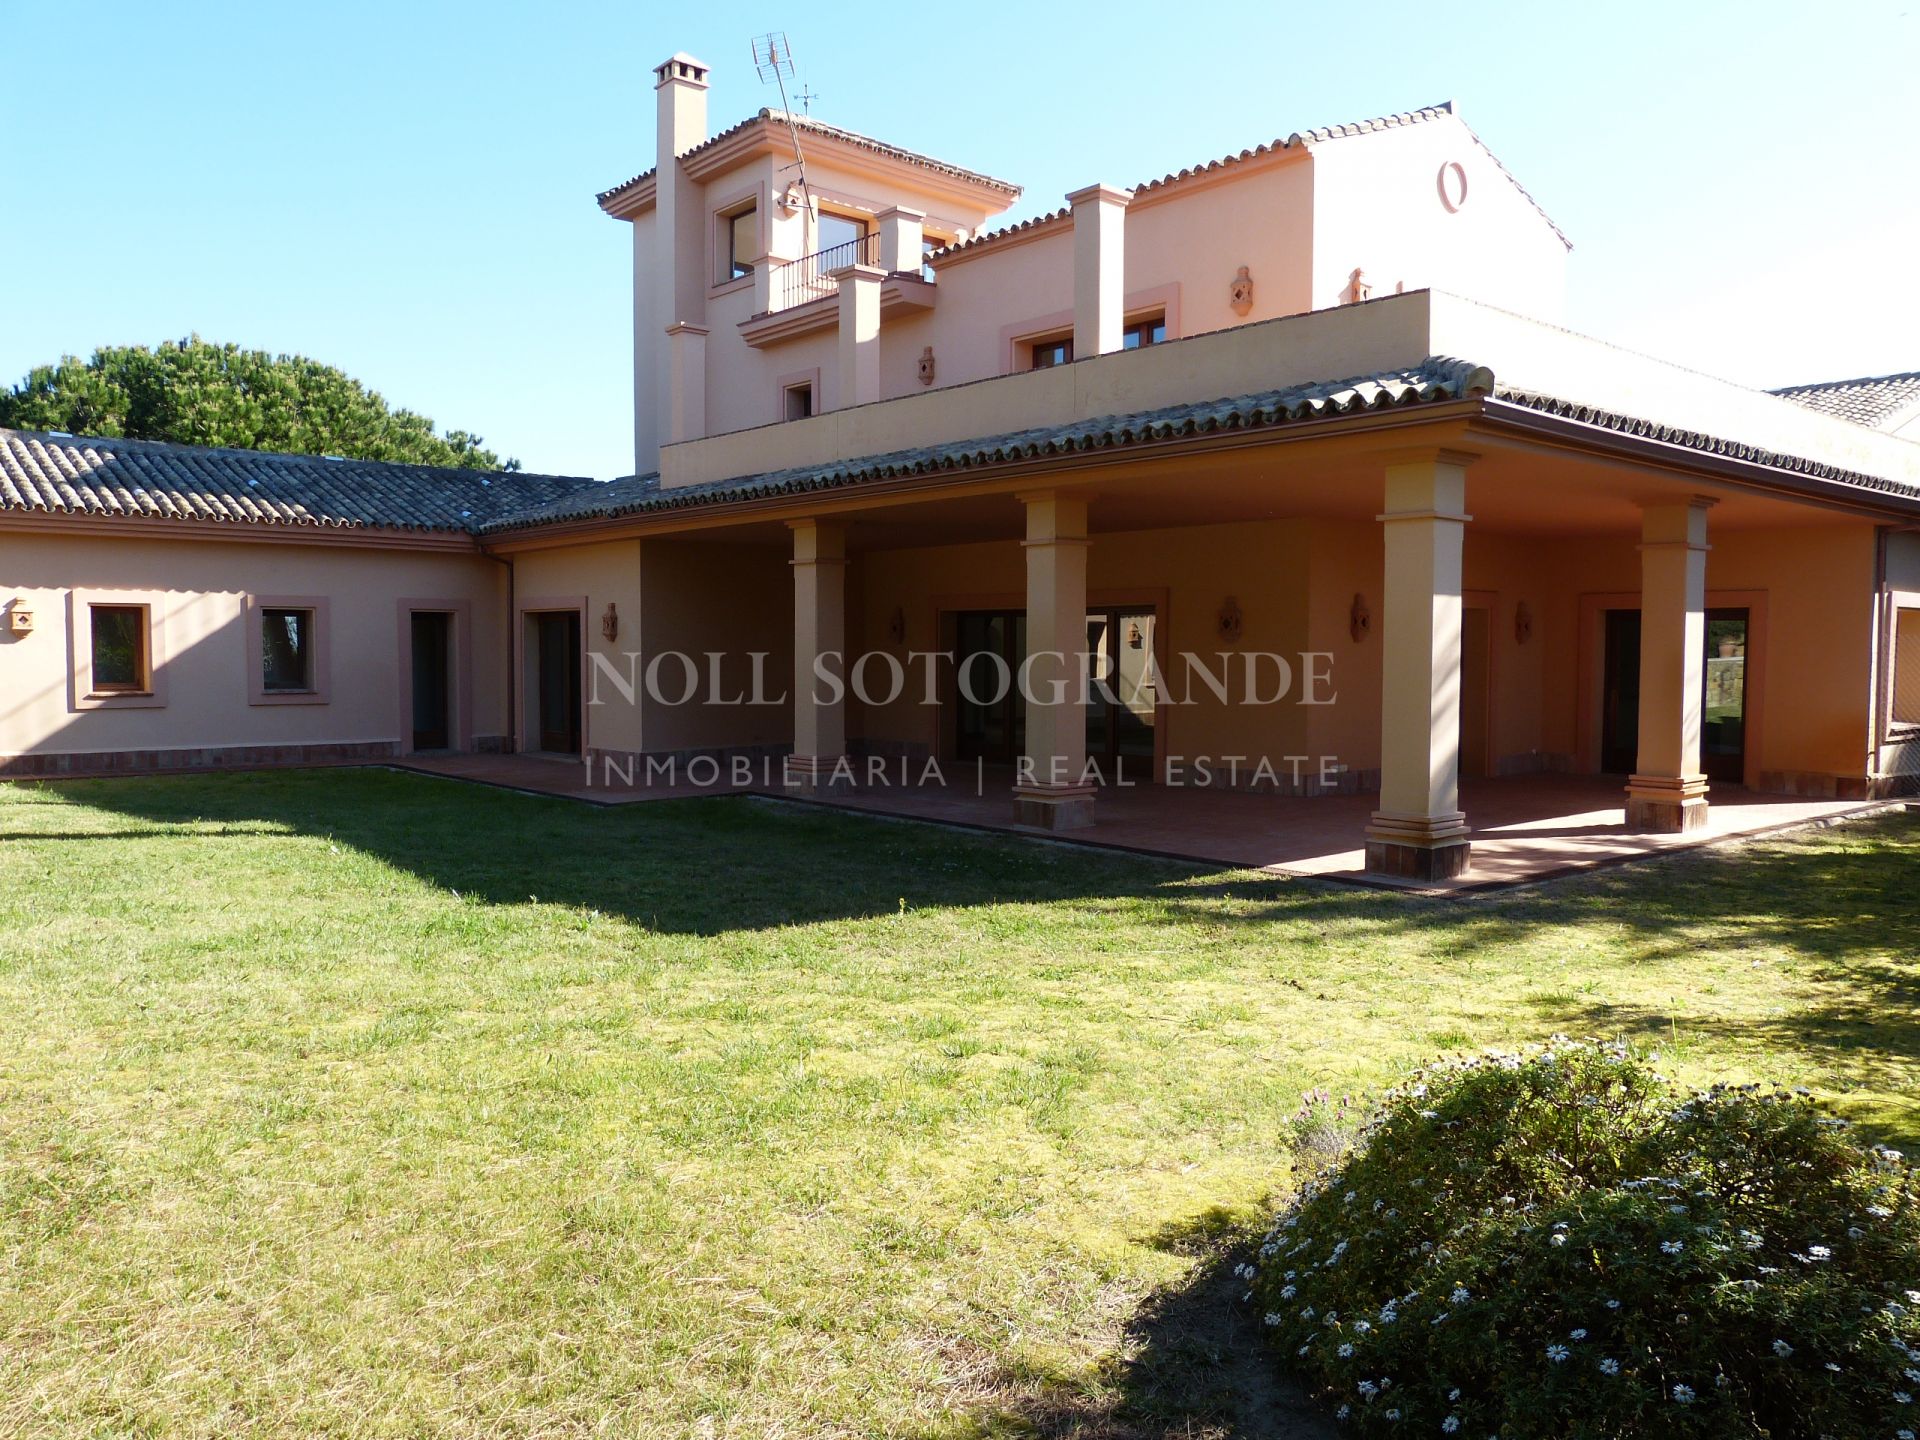 Villa close to the Sotogrande International School for rent